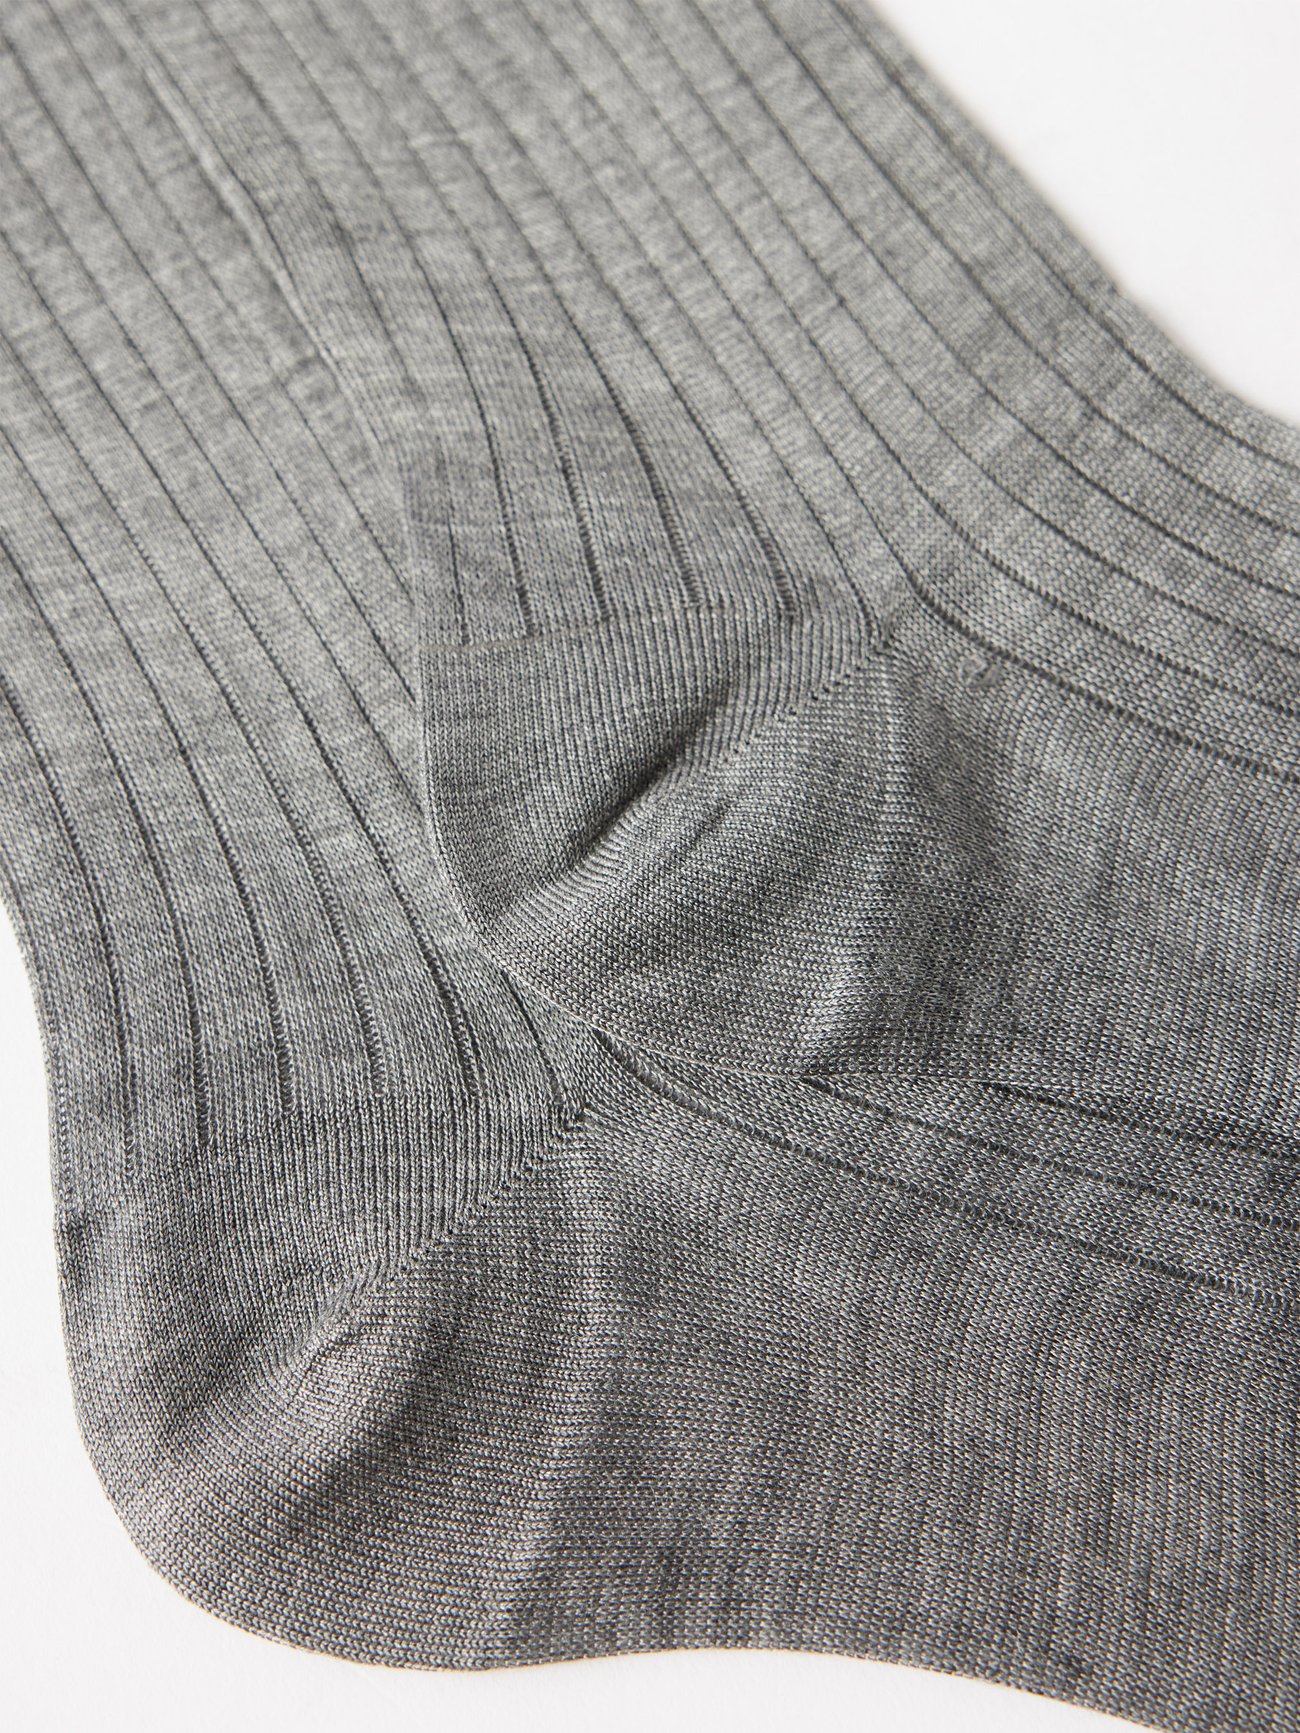 Grey Over-the-knee ribbed silk socks, Raey